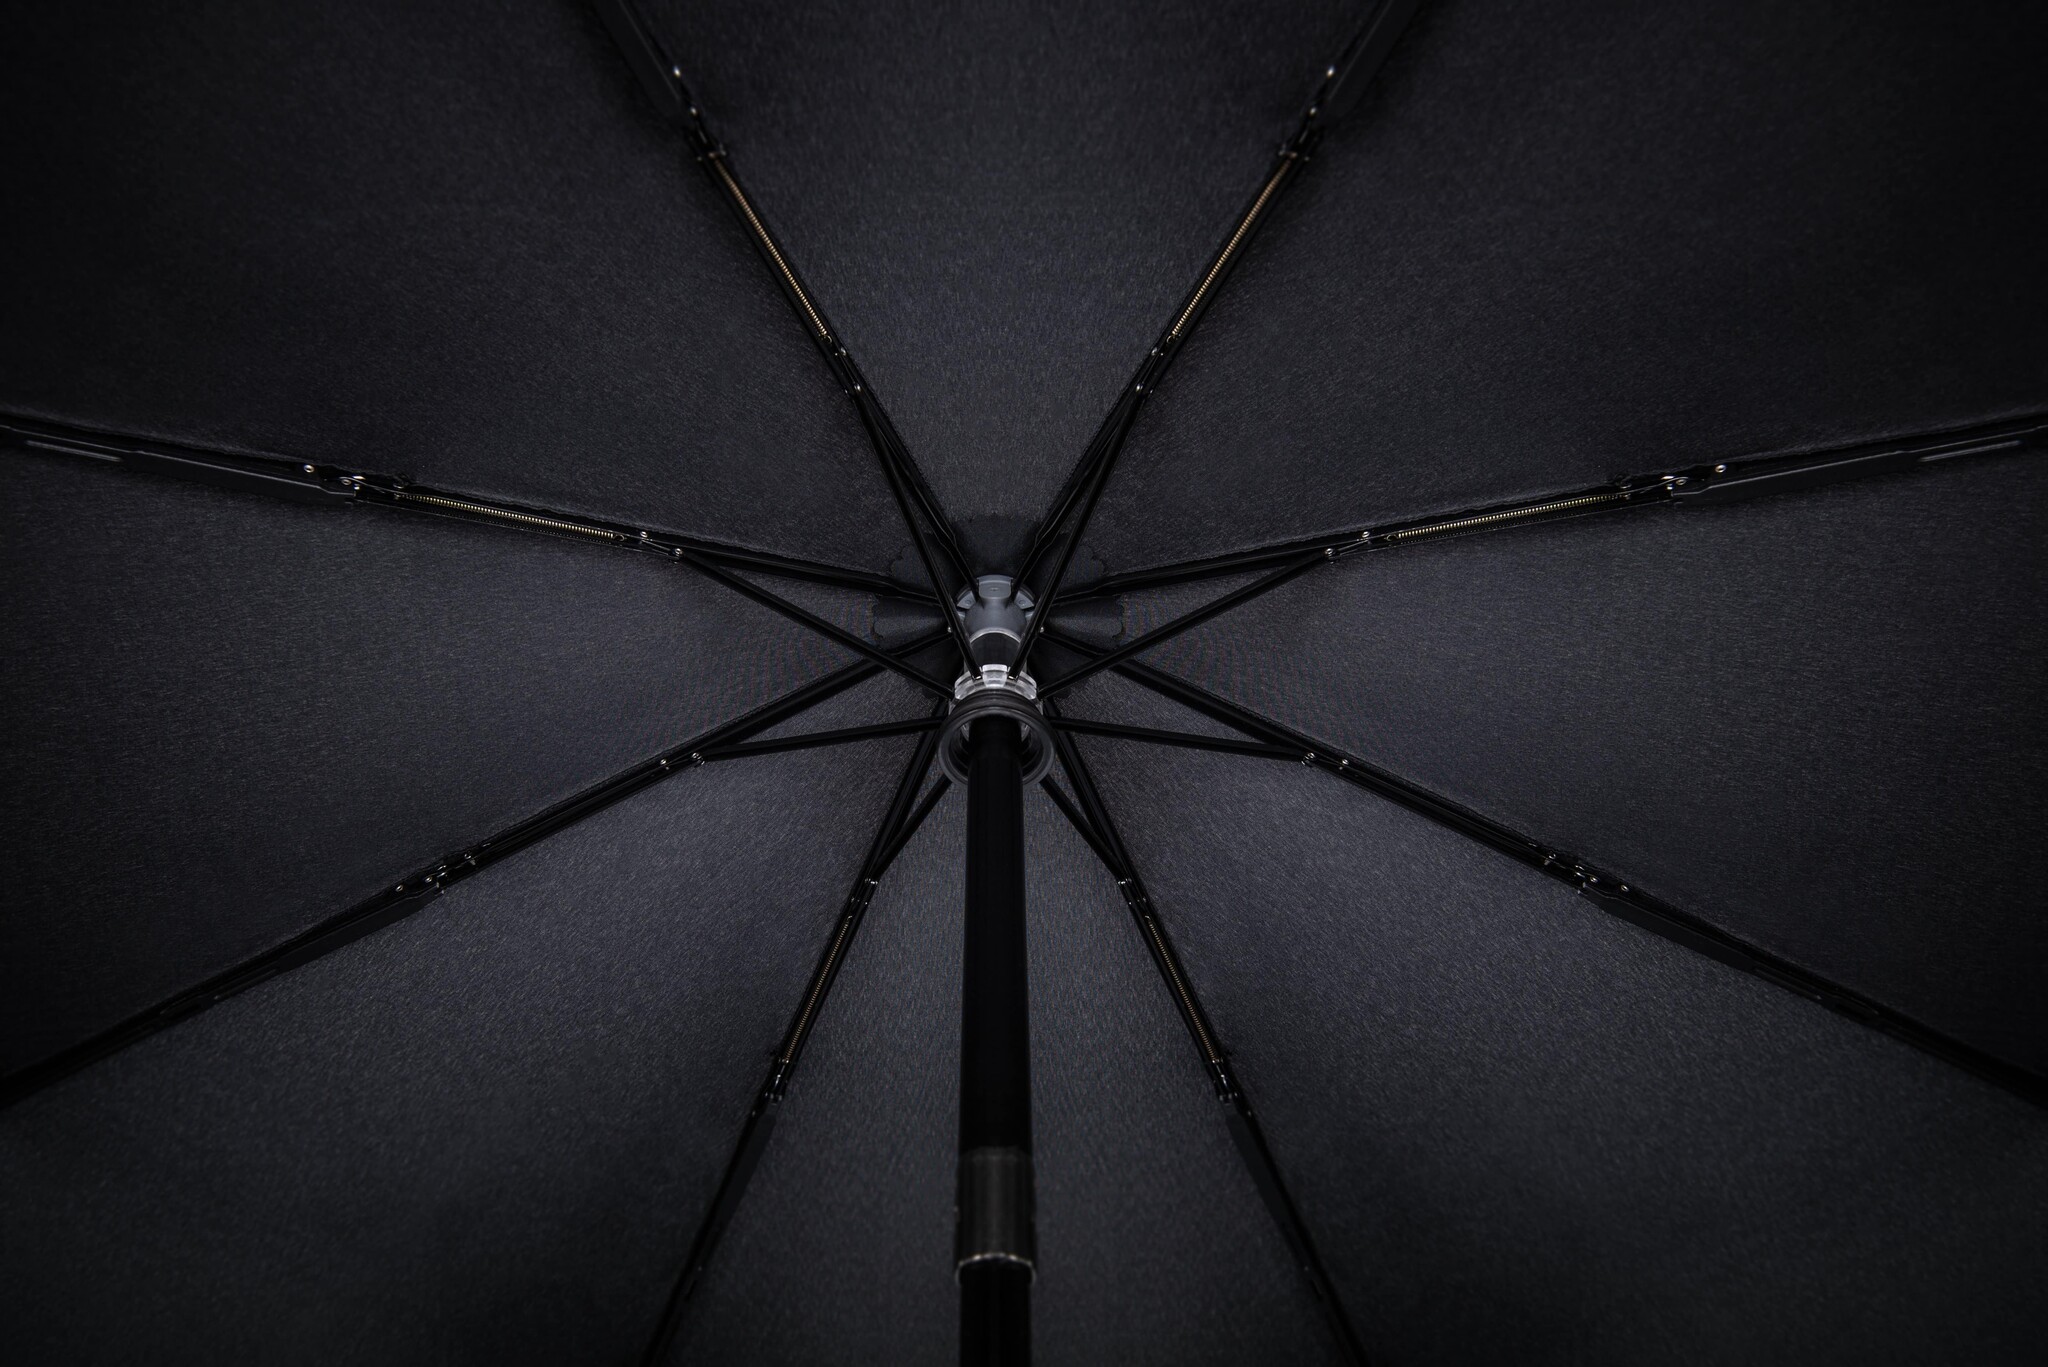 Knirps Knirps T-301 Duomatic Windproof Paraplu - Black - Stormproof familie paraplu